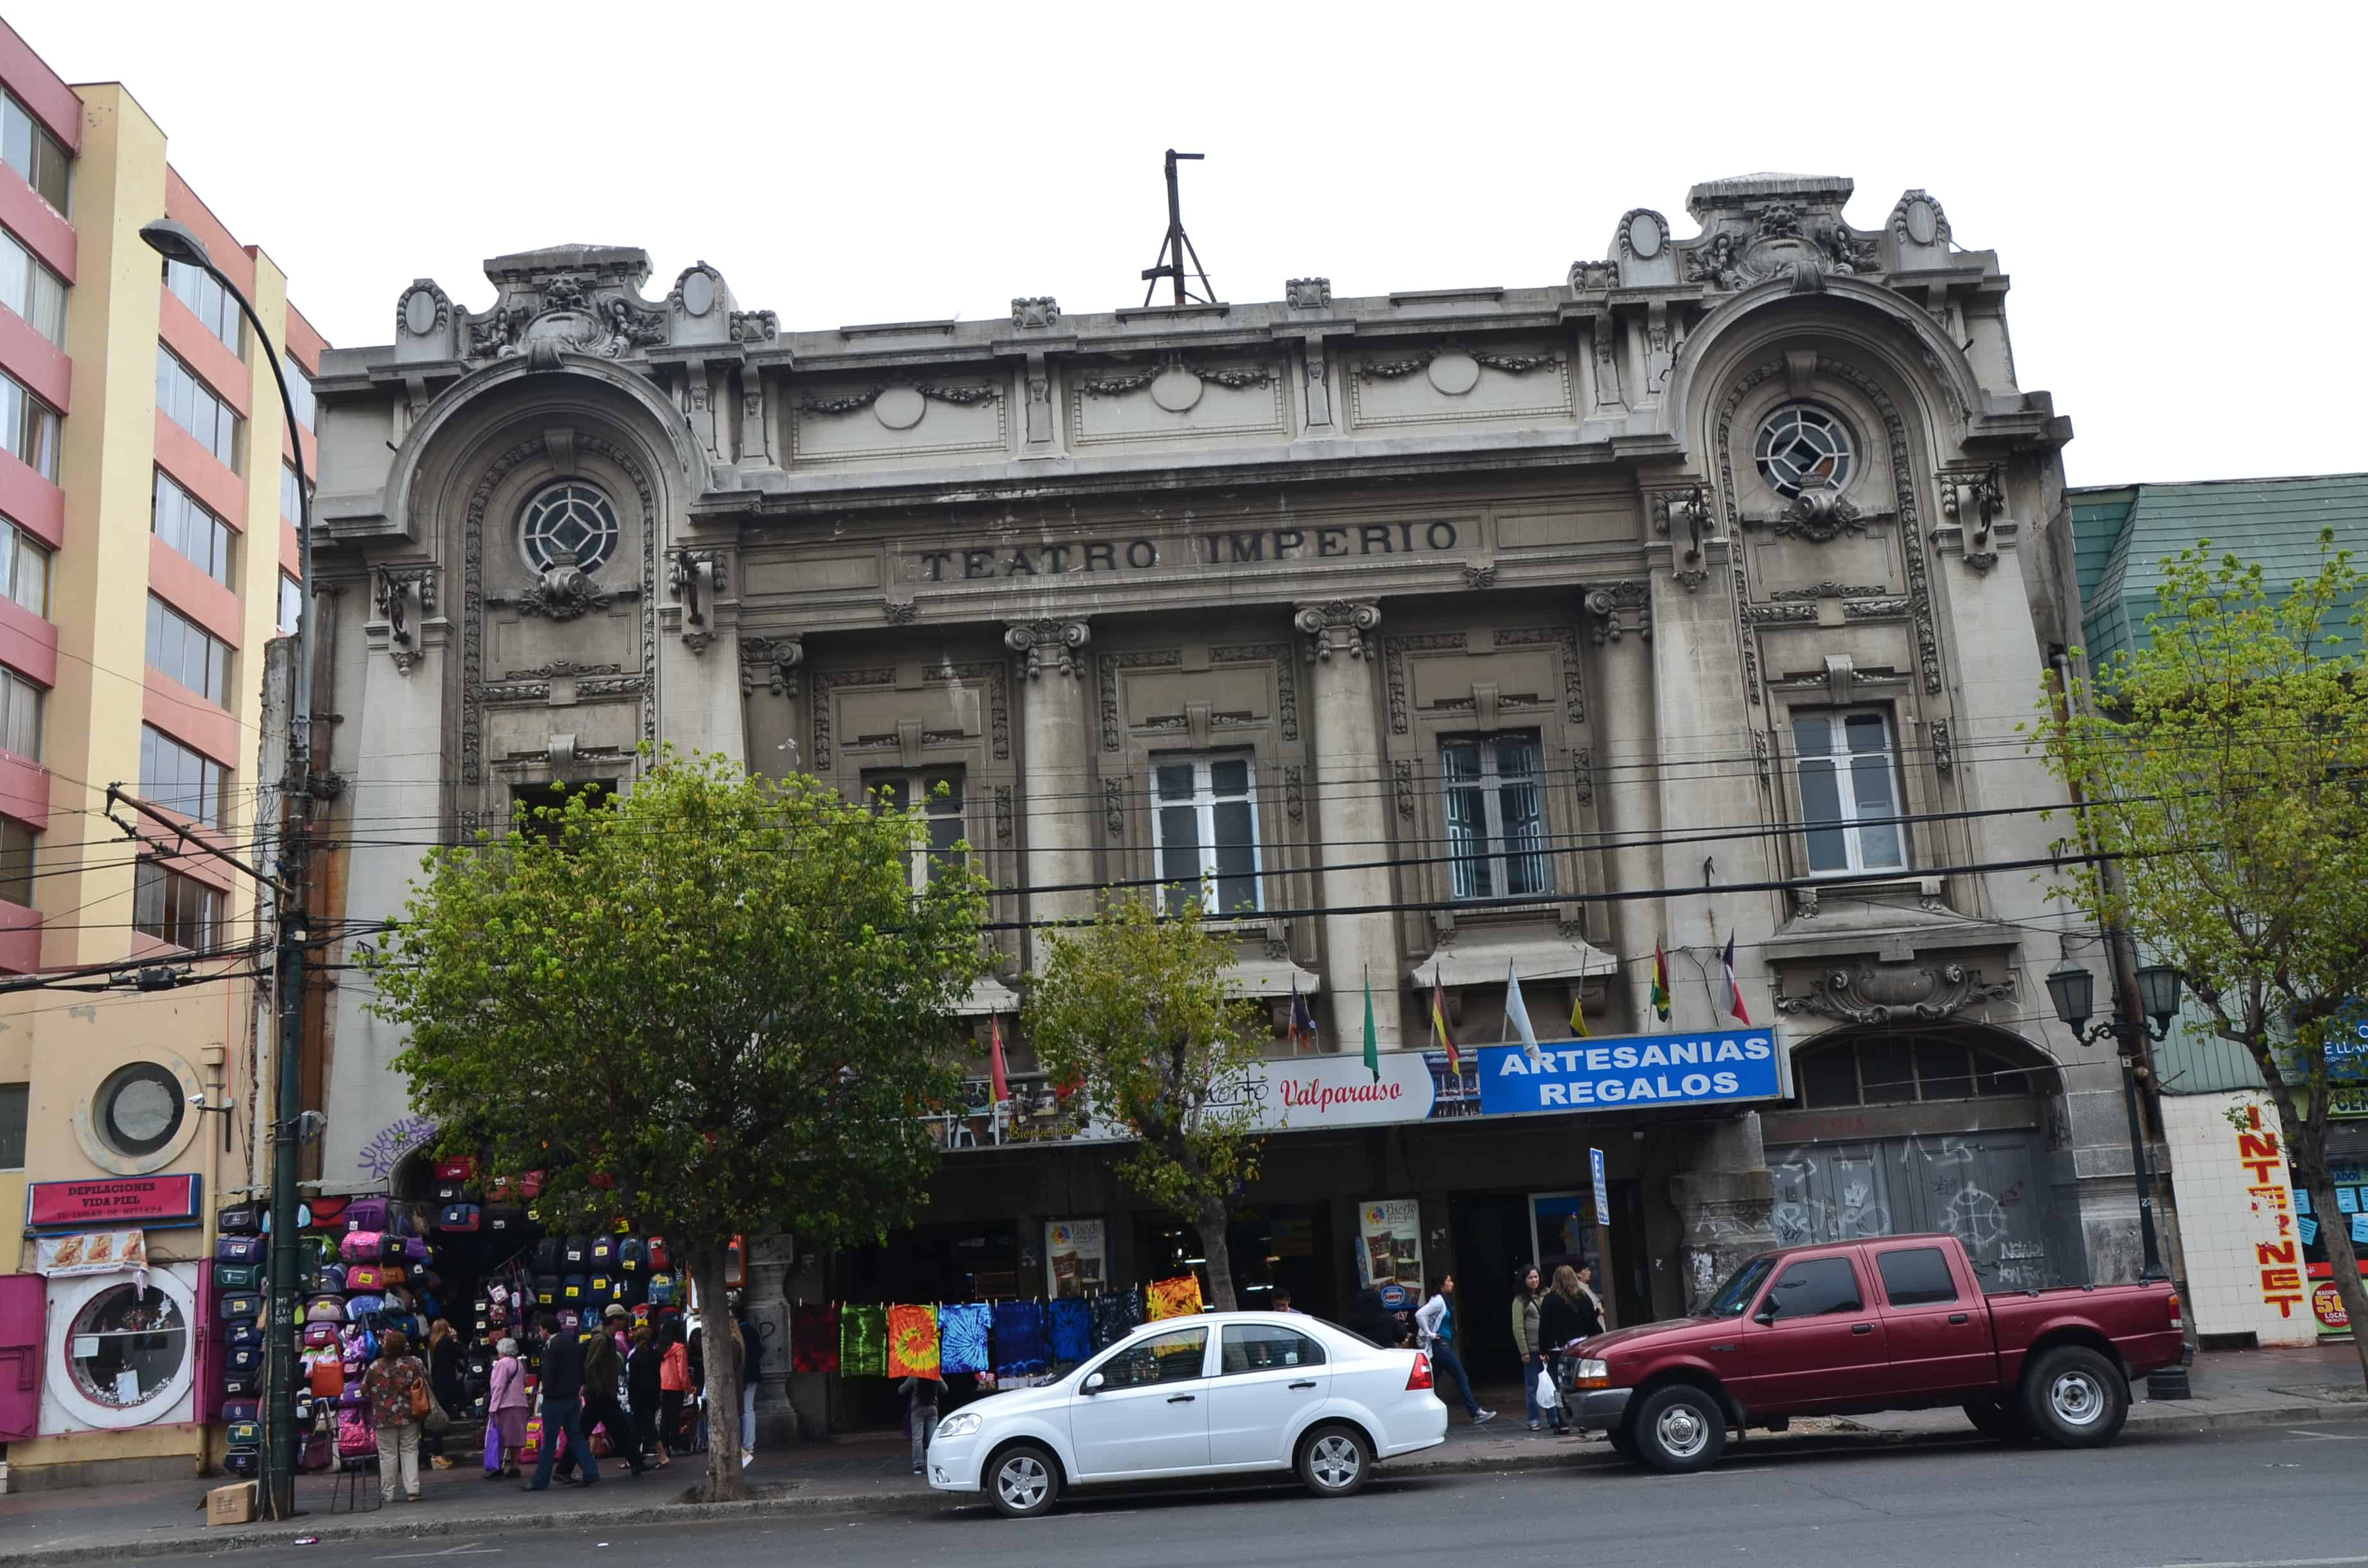 Teatro Imperio in Valparaíso, Chile